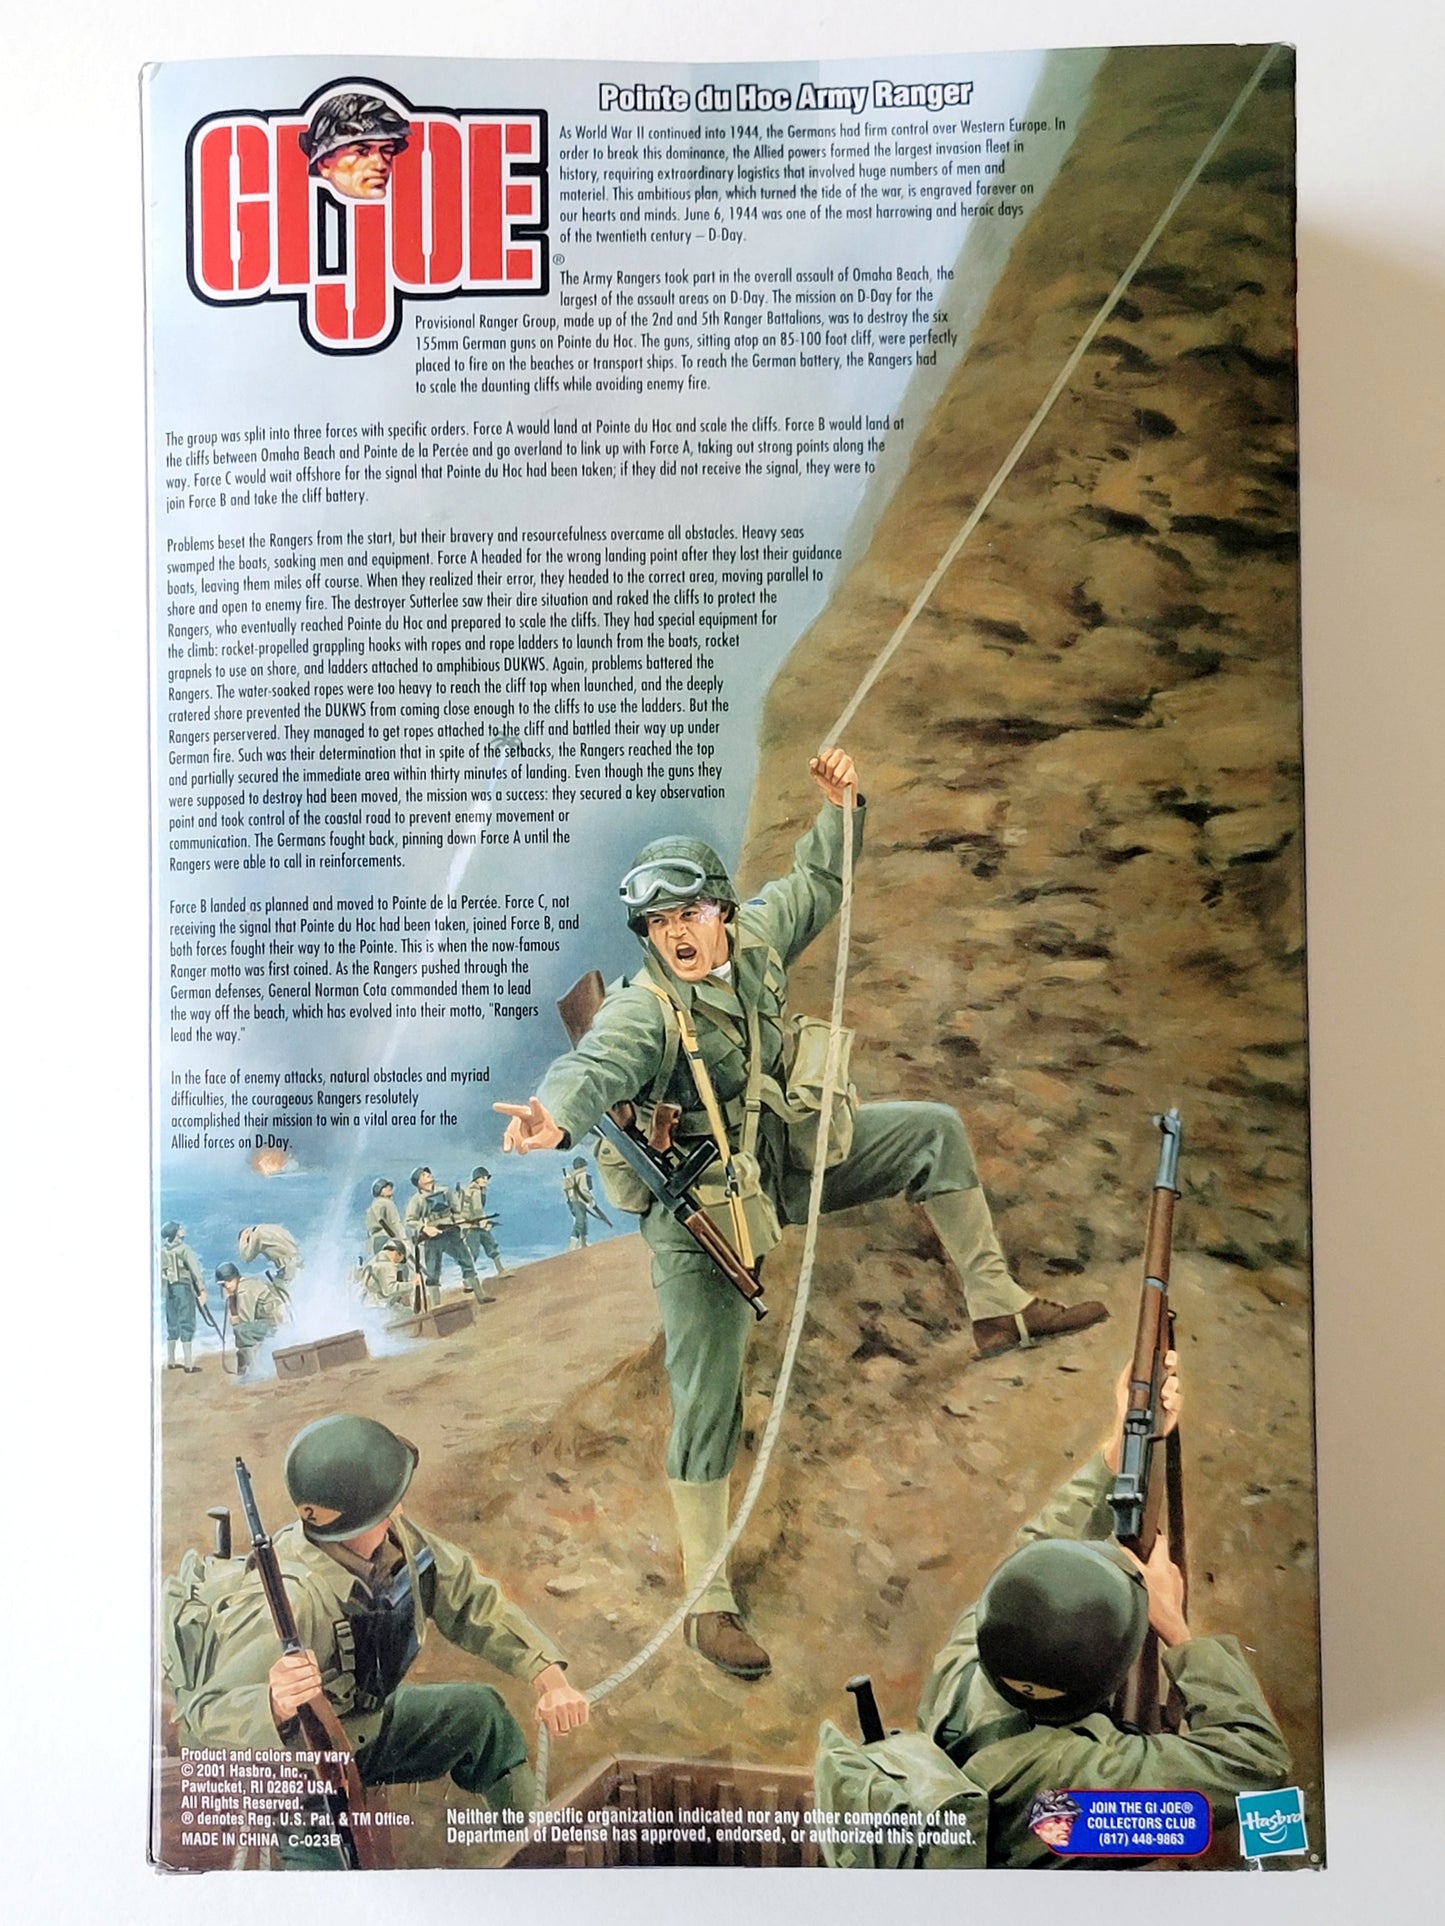 G.I. Joe Pointe du Hoc Army Ranger 12-Inch Action Figure